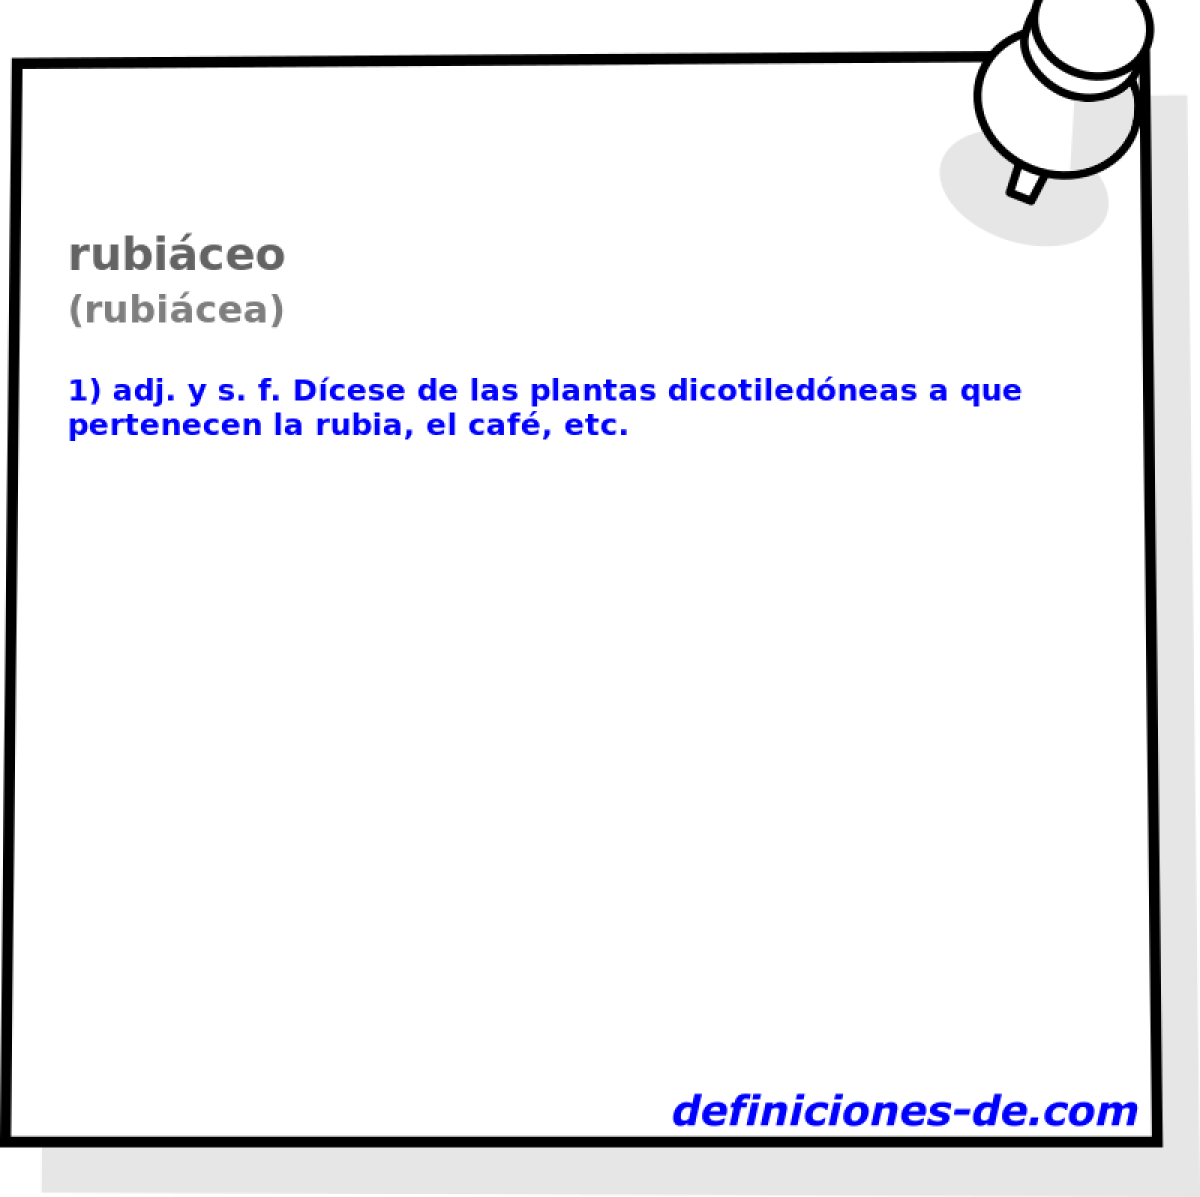 rubiceo (rubicea)